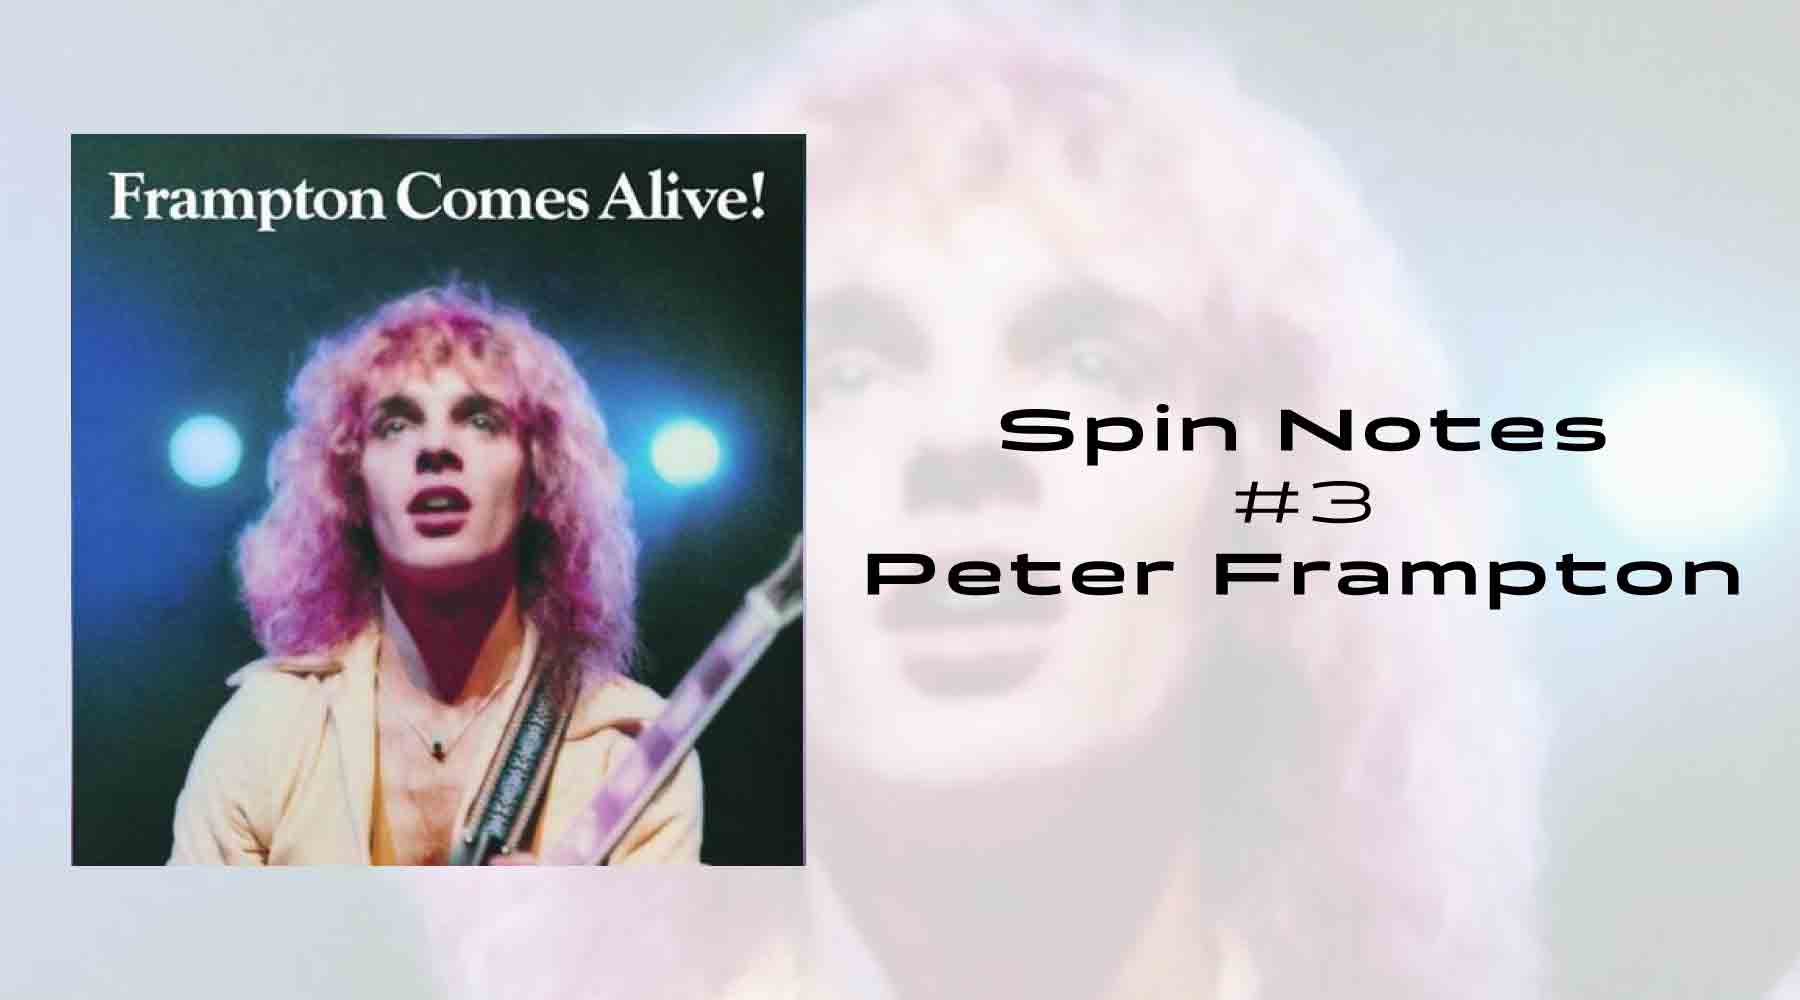 Spin Notes #3: Peter Frampton - Frampton Comes Alive!